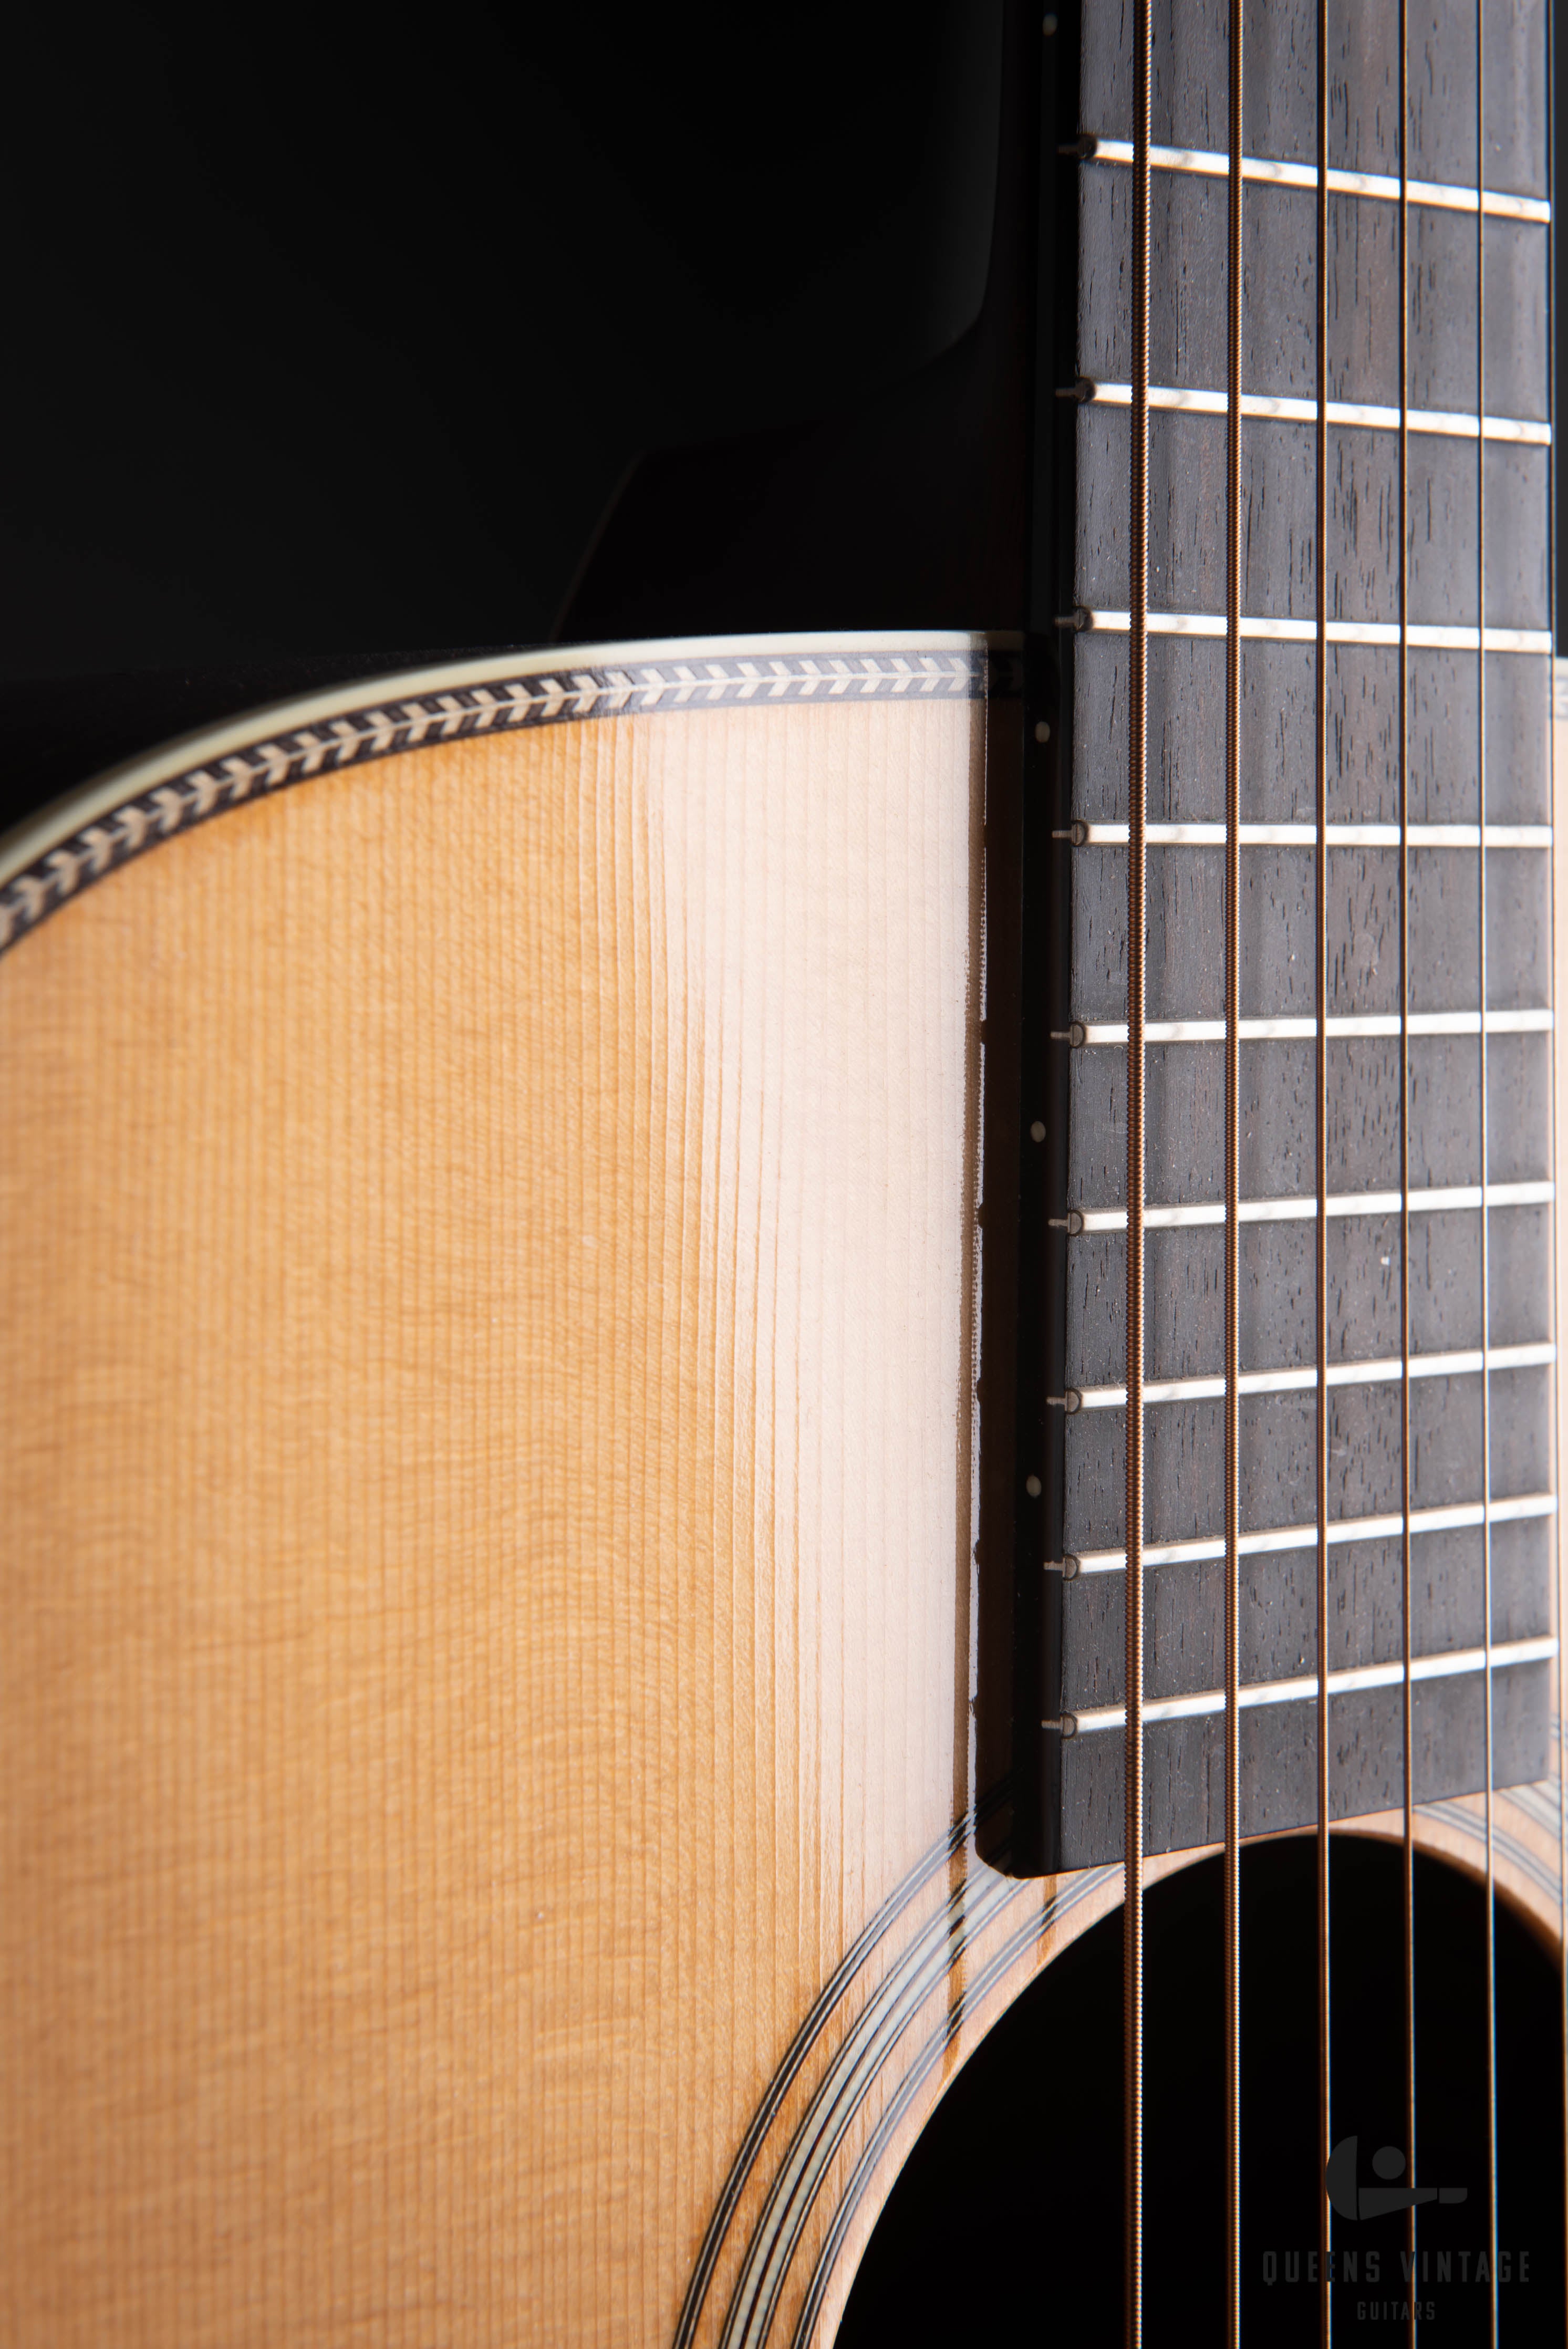 2014 Collings OM2HG SS Acoustic Guitar w/ Handmade case